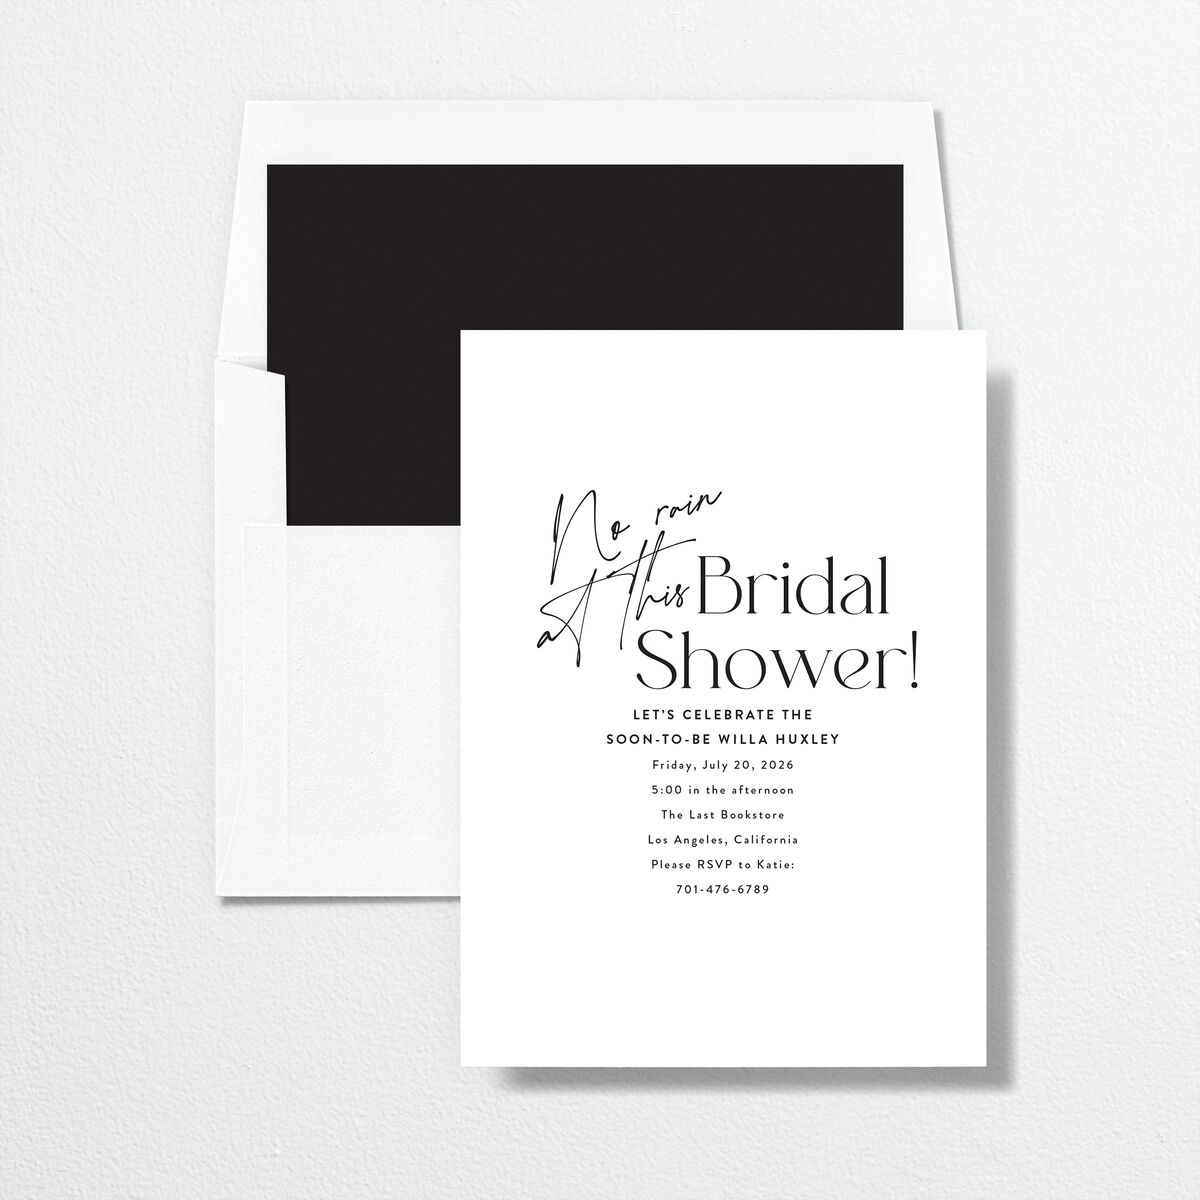 Happy Tears Bridal Shower Invitations envelope-and-liner in Black